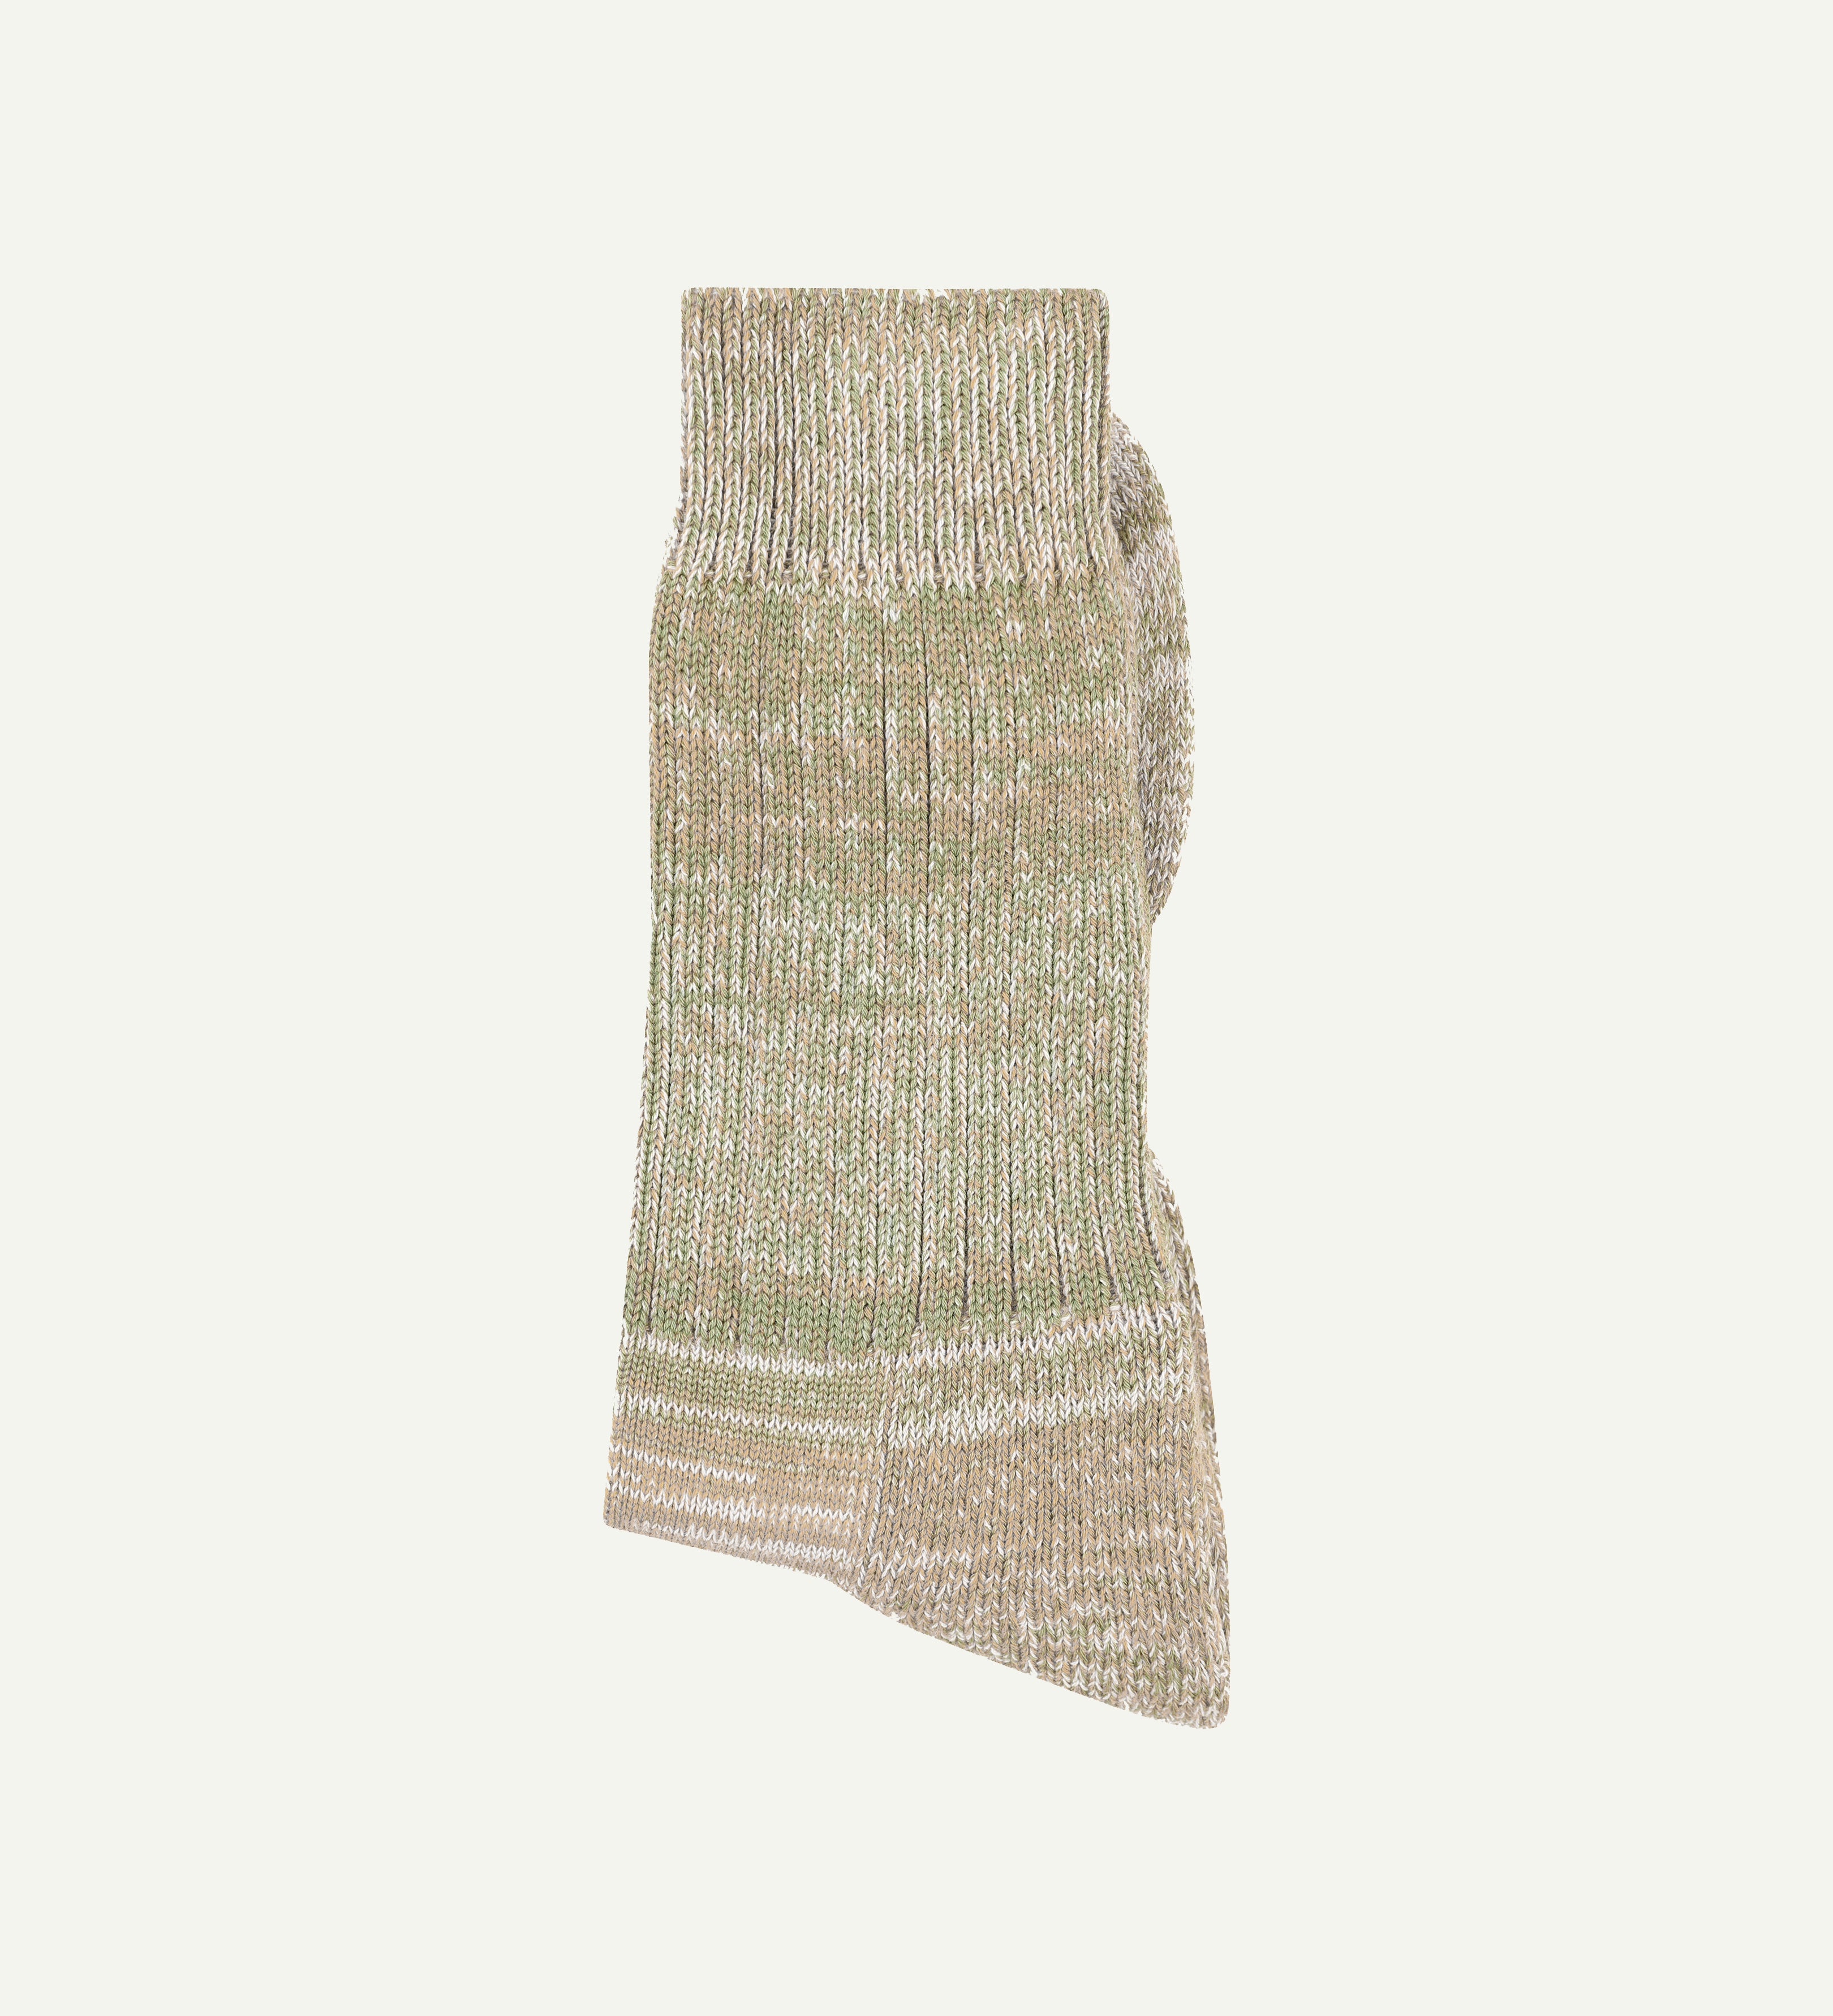 Folded shot of Uskees #4006 organic cotton socks in khaki